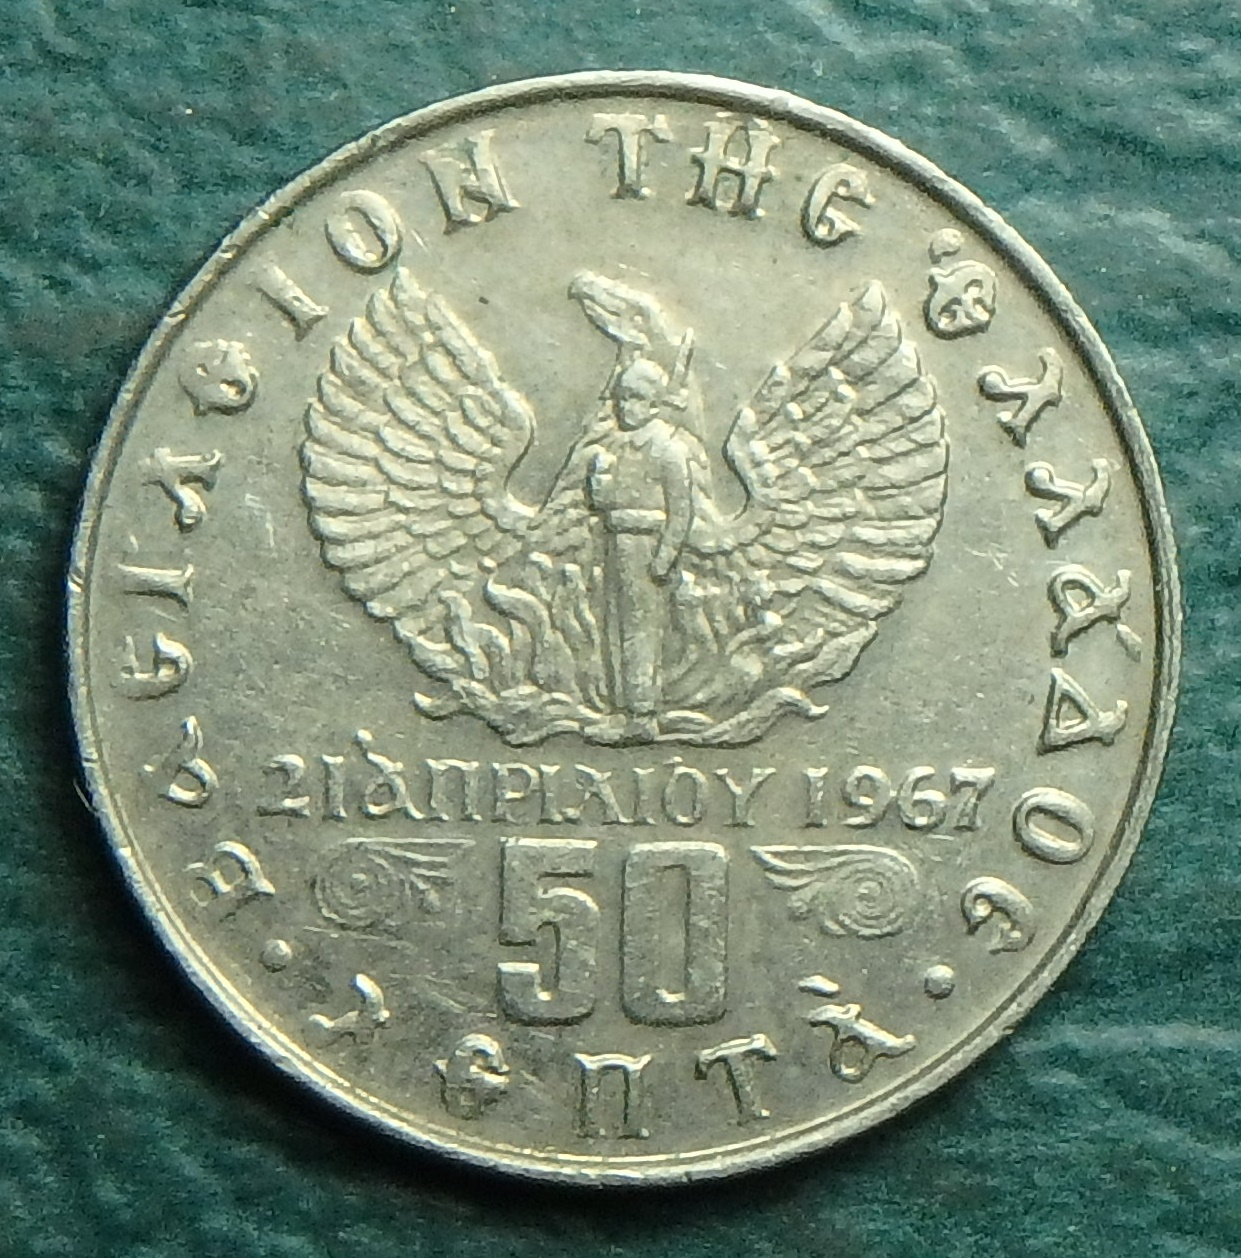 1973 GR 50 l rev.JPG